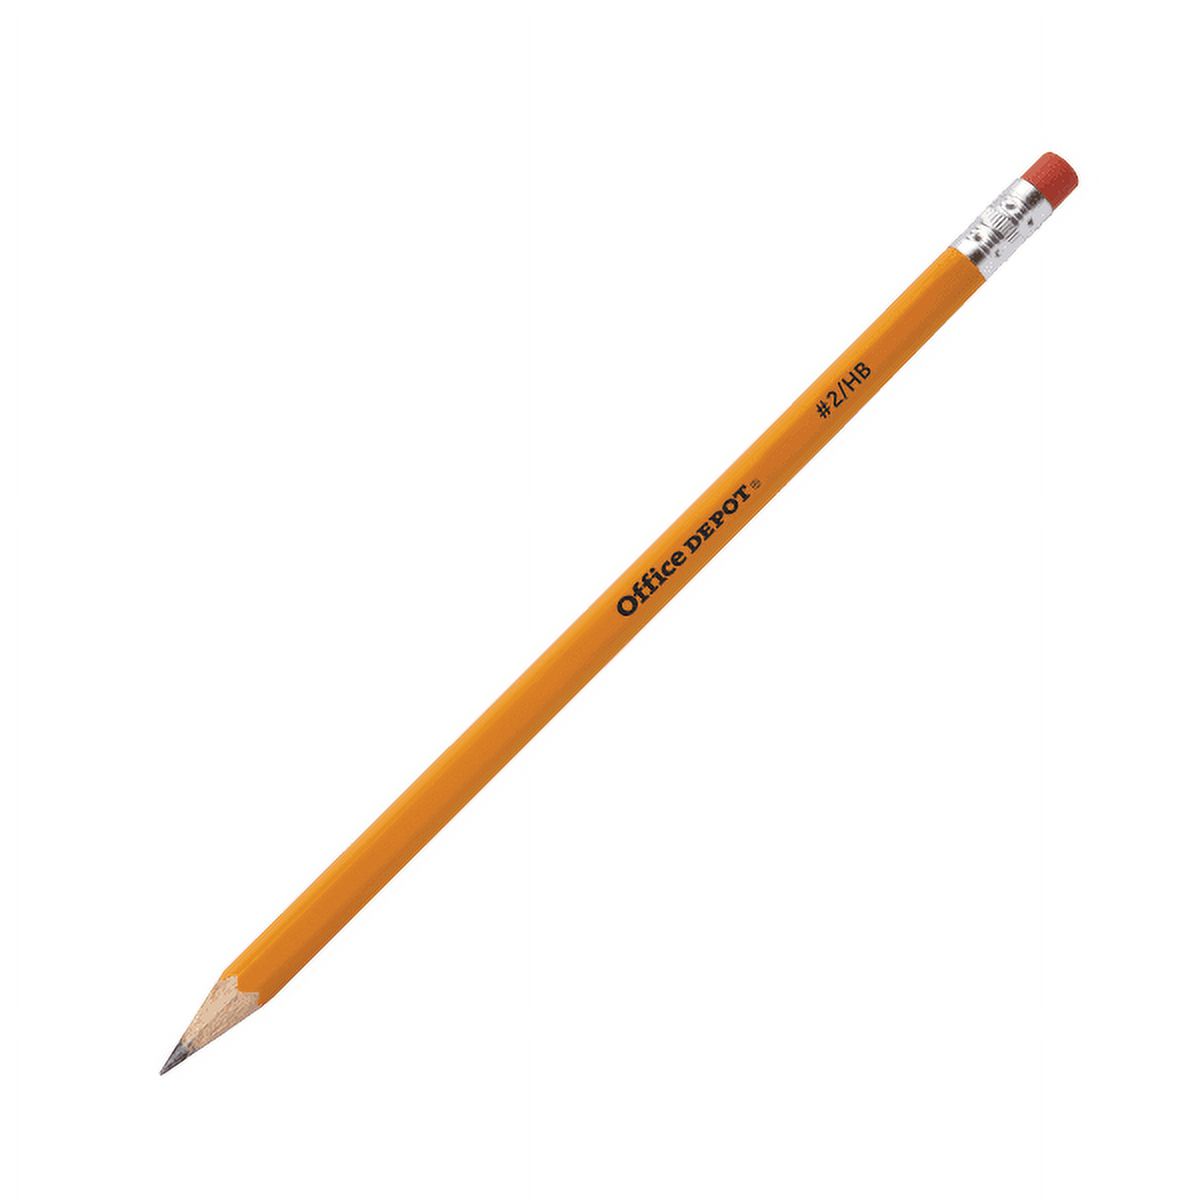 Office Depot® Brand Presharpened Wood Pencils, #2 Medium Soft Lead, Yellow,  Pack Of 24 Pencils 